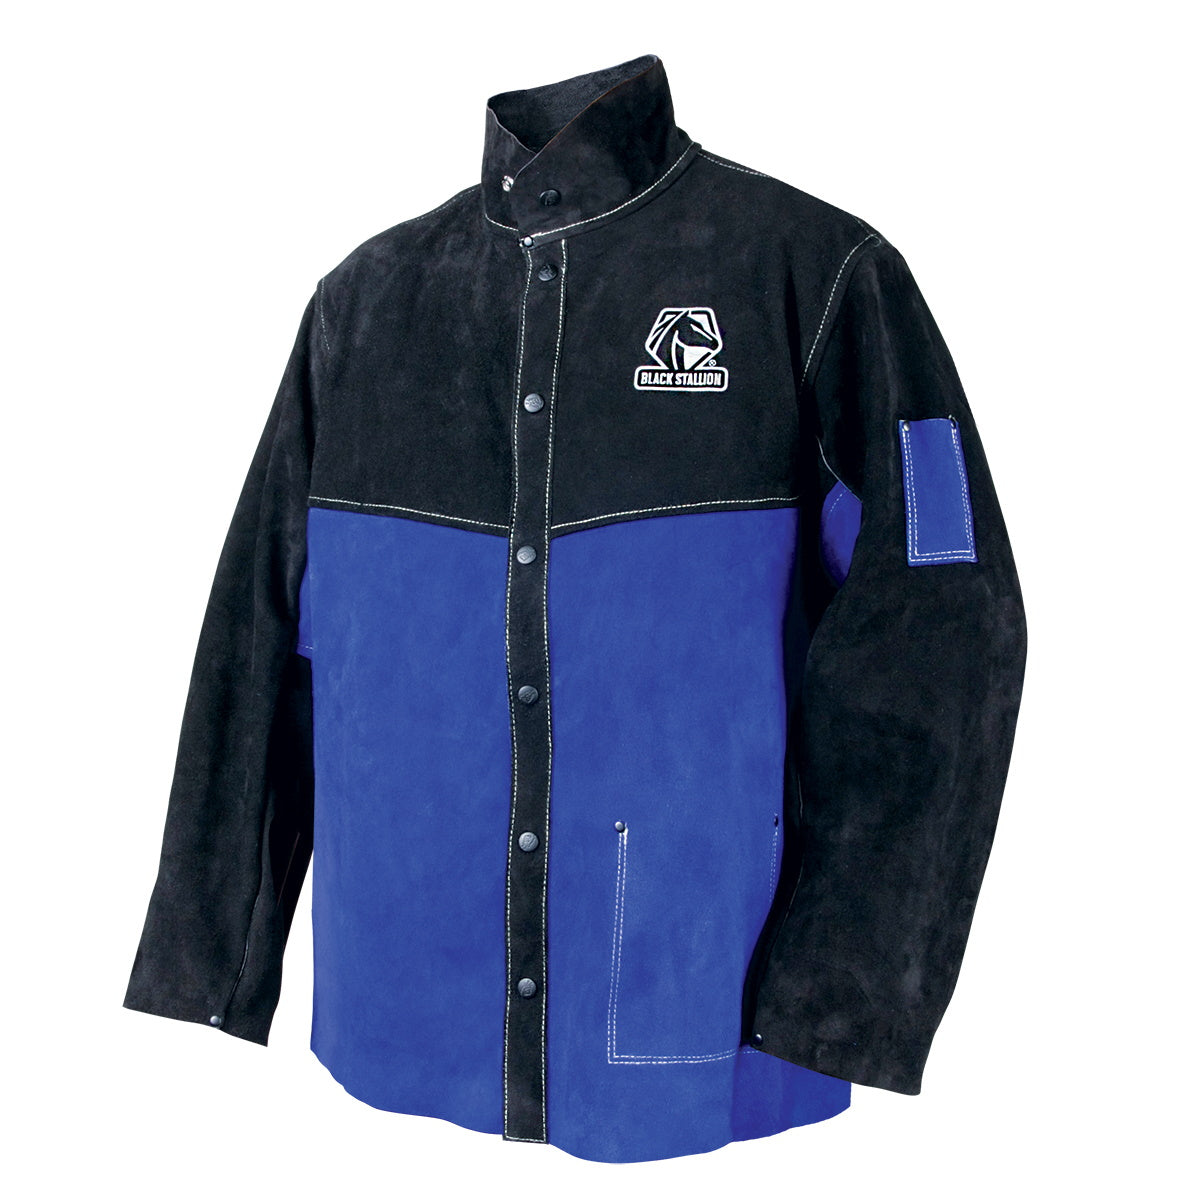 Revco Black Stallion Royal Blue/Black Color Block Leather Welding Jacket (JL1030-BB)